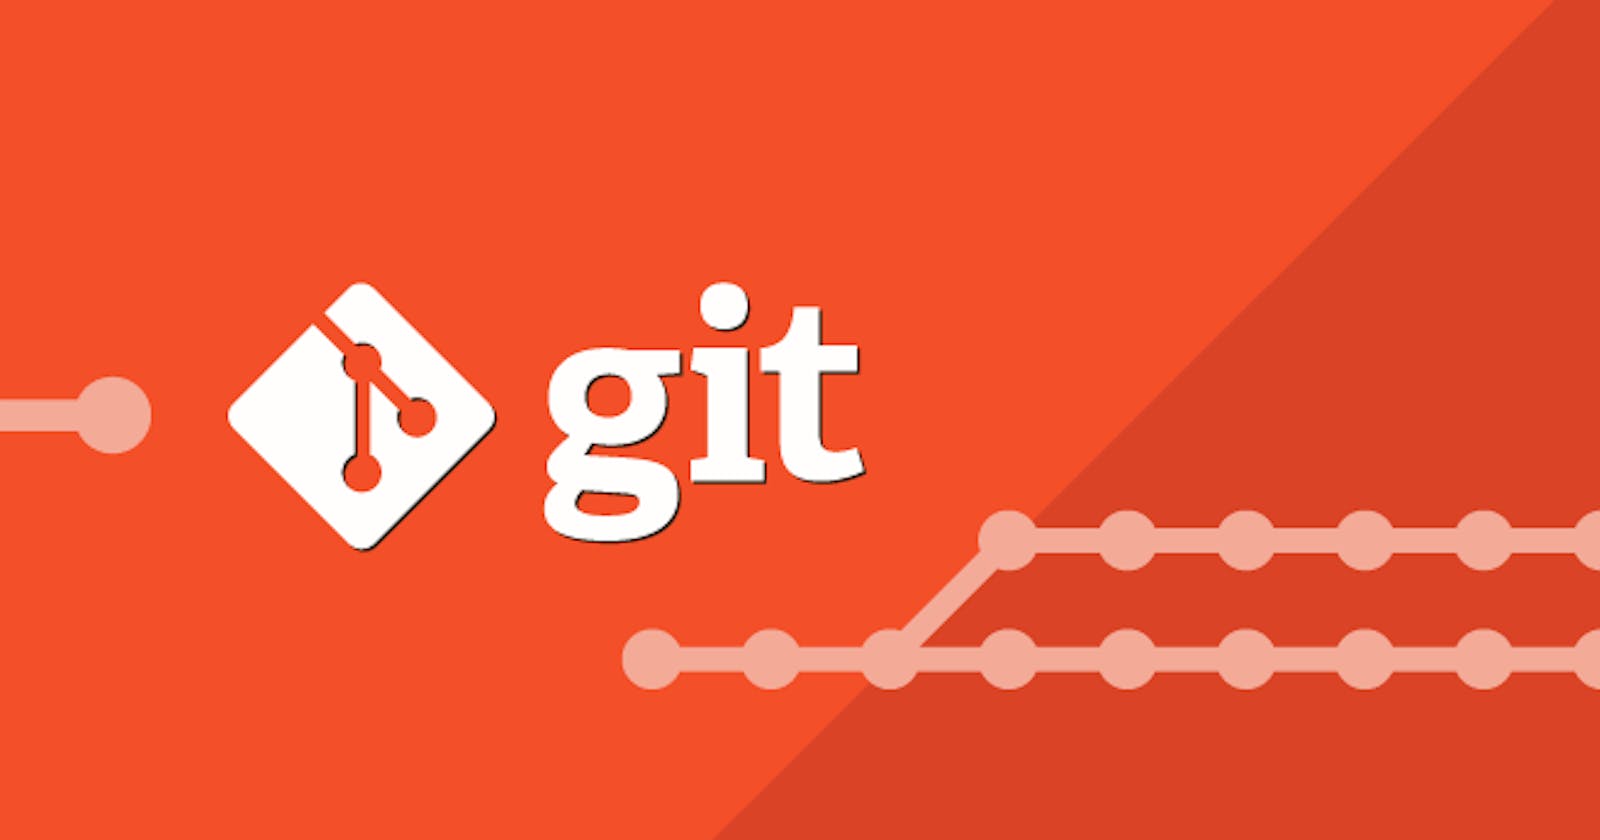 Git Tasks/Workloads